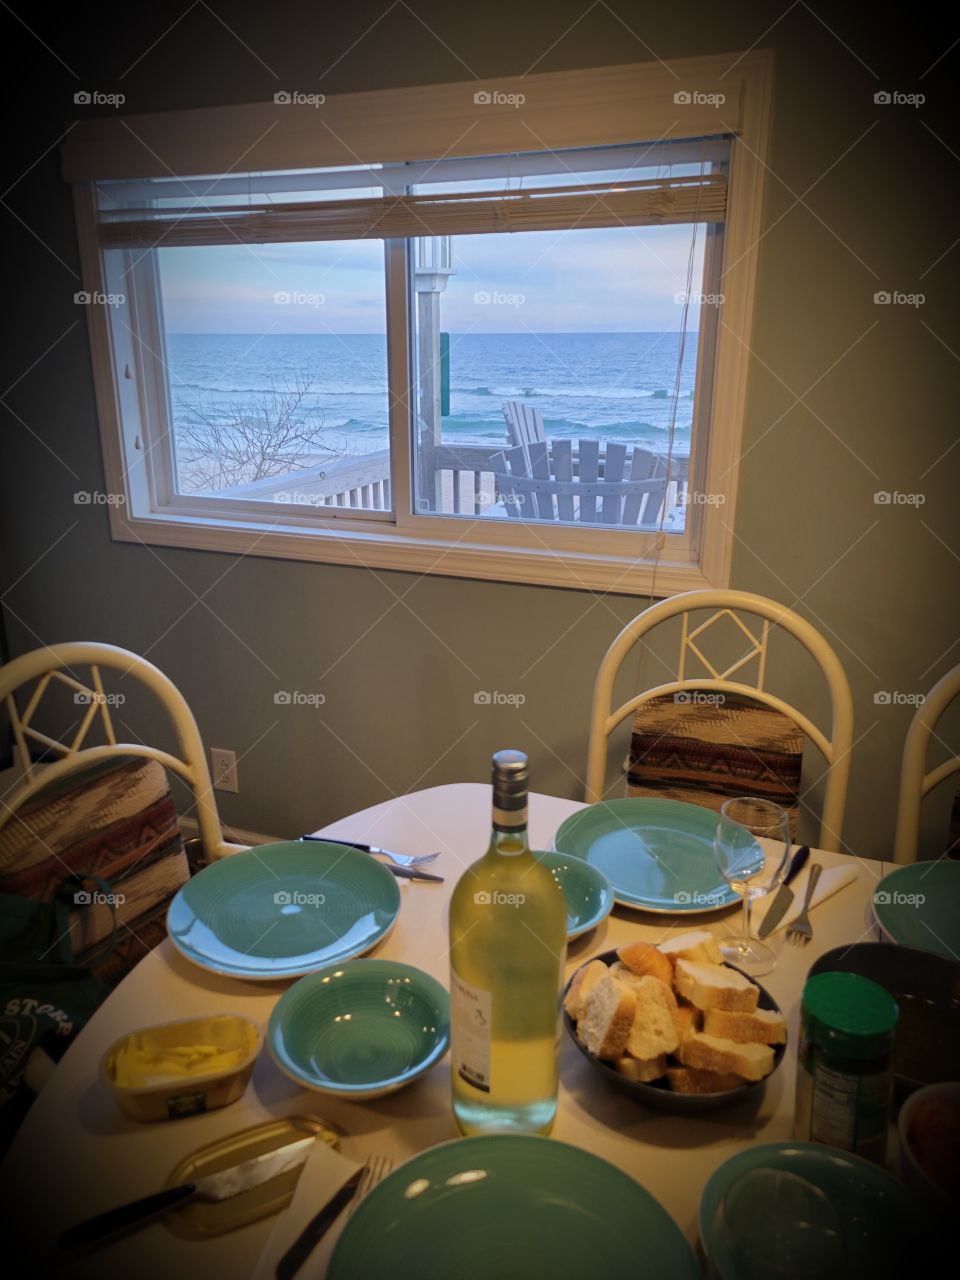 dinner at the ocean